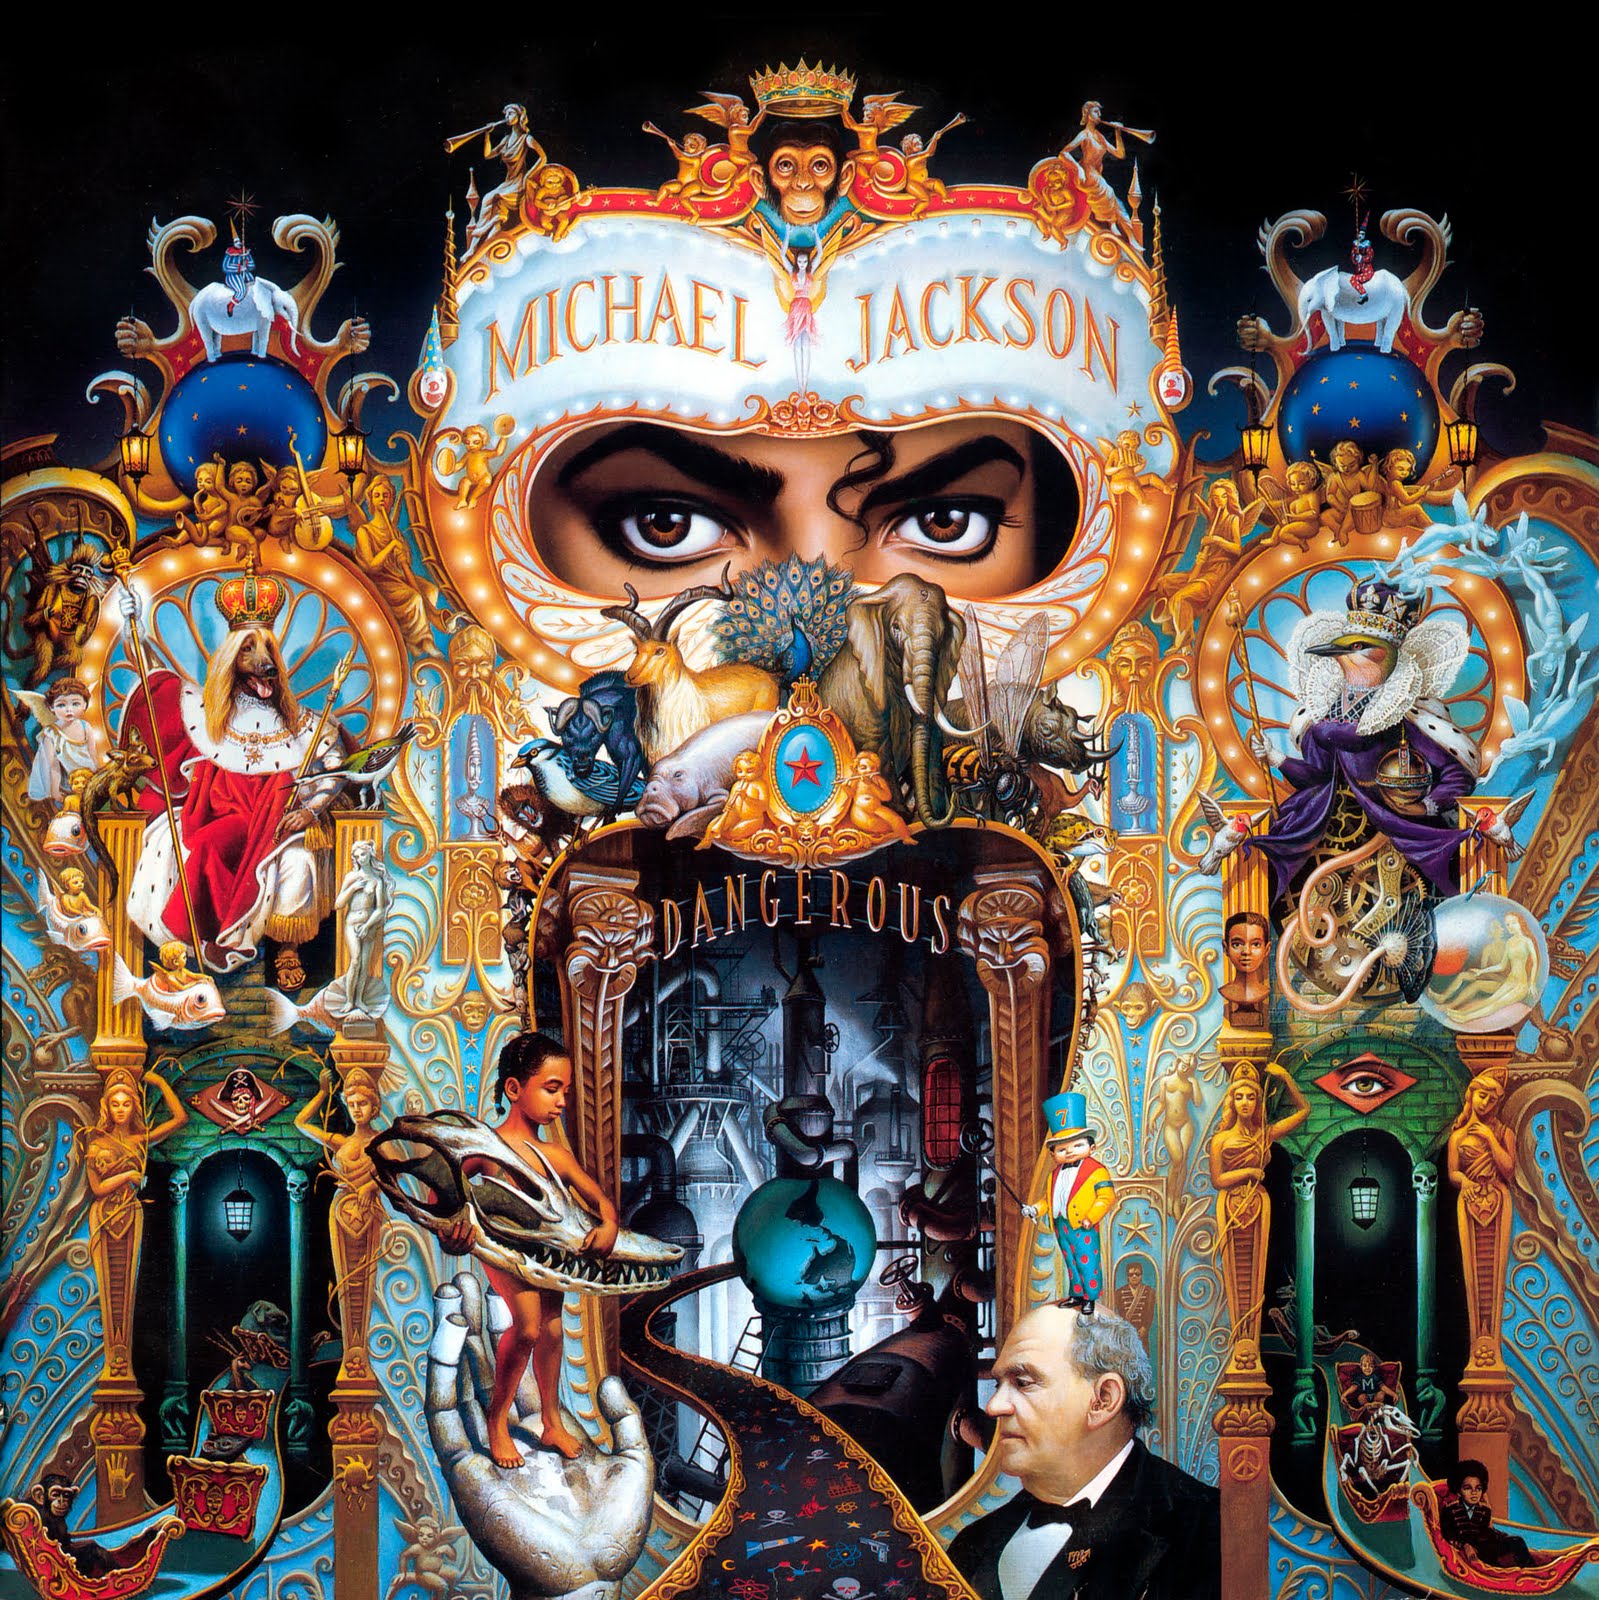 the cover to Michael Jackson's Dangerous album